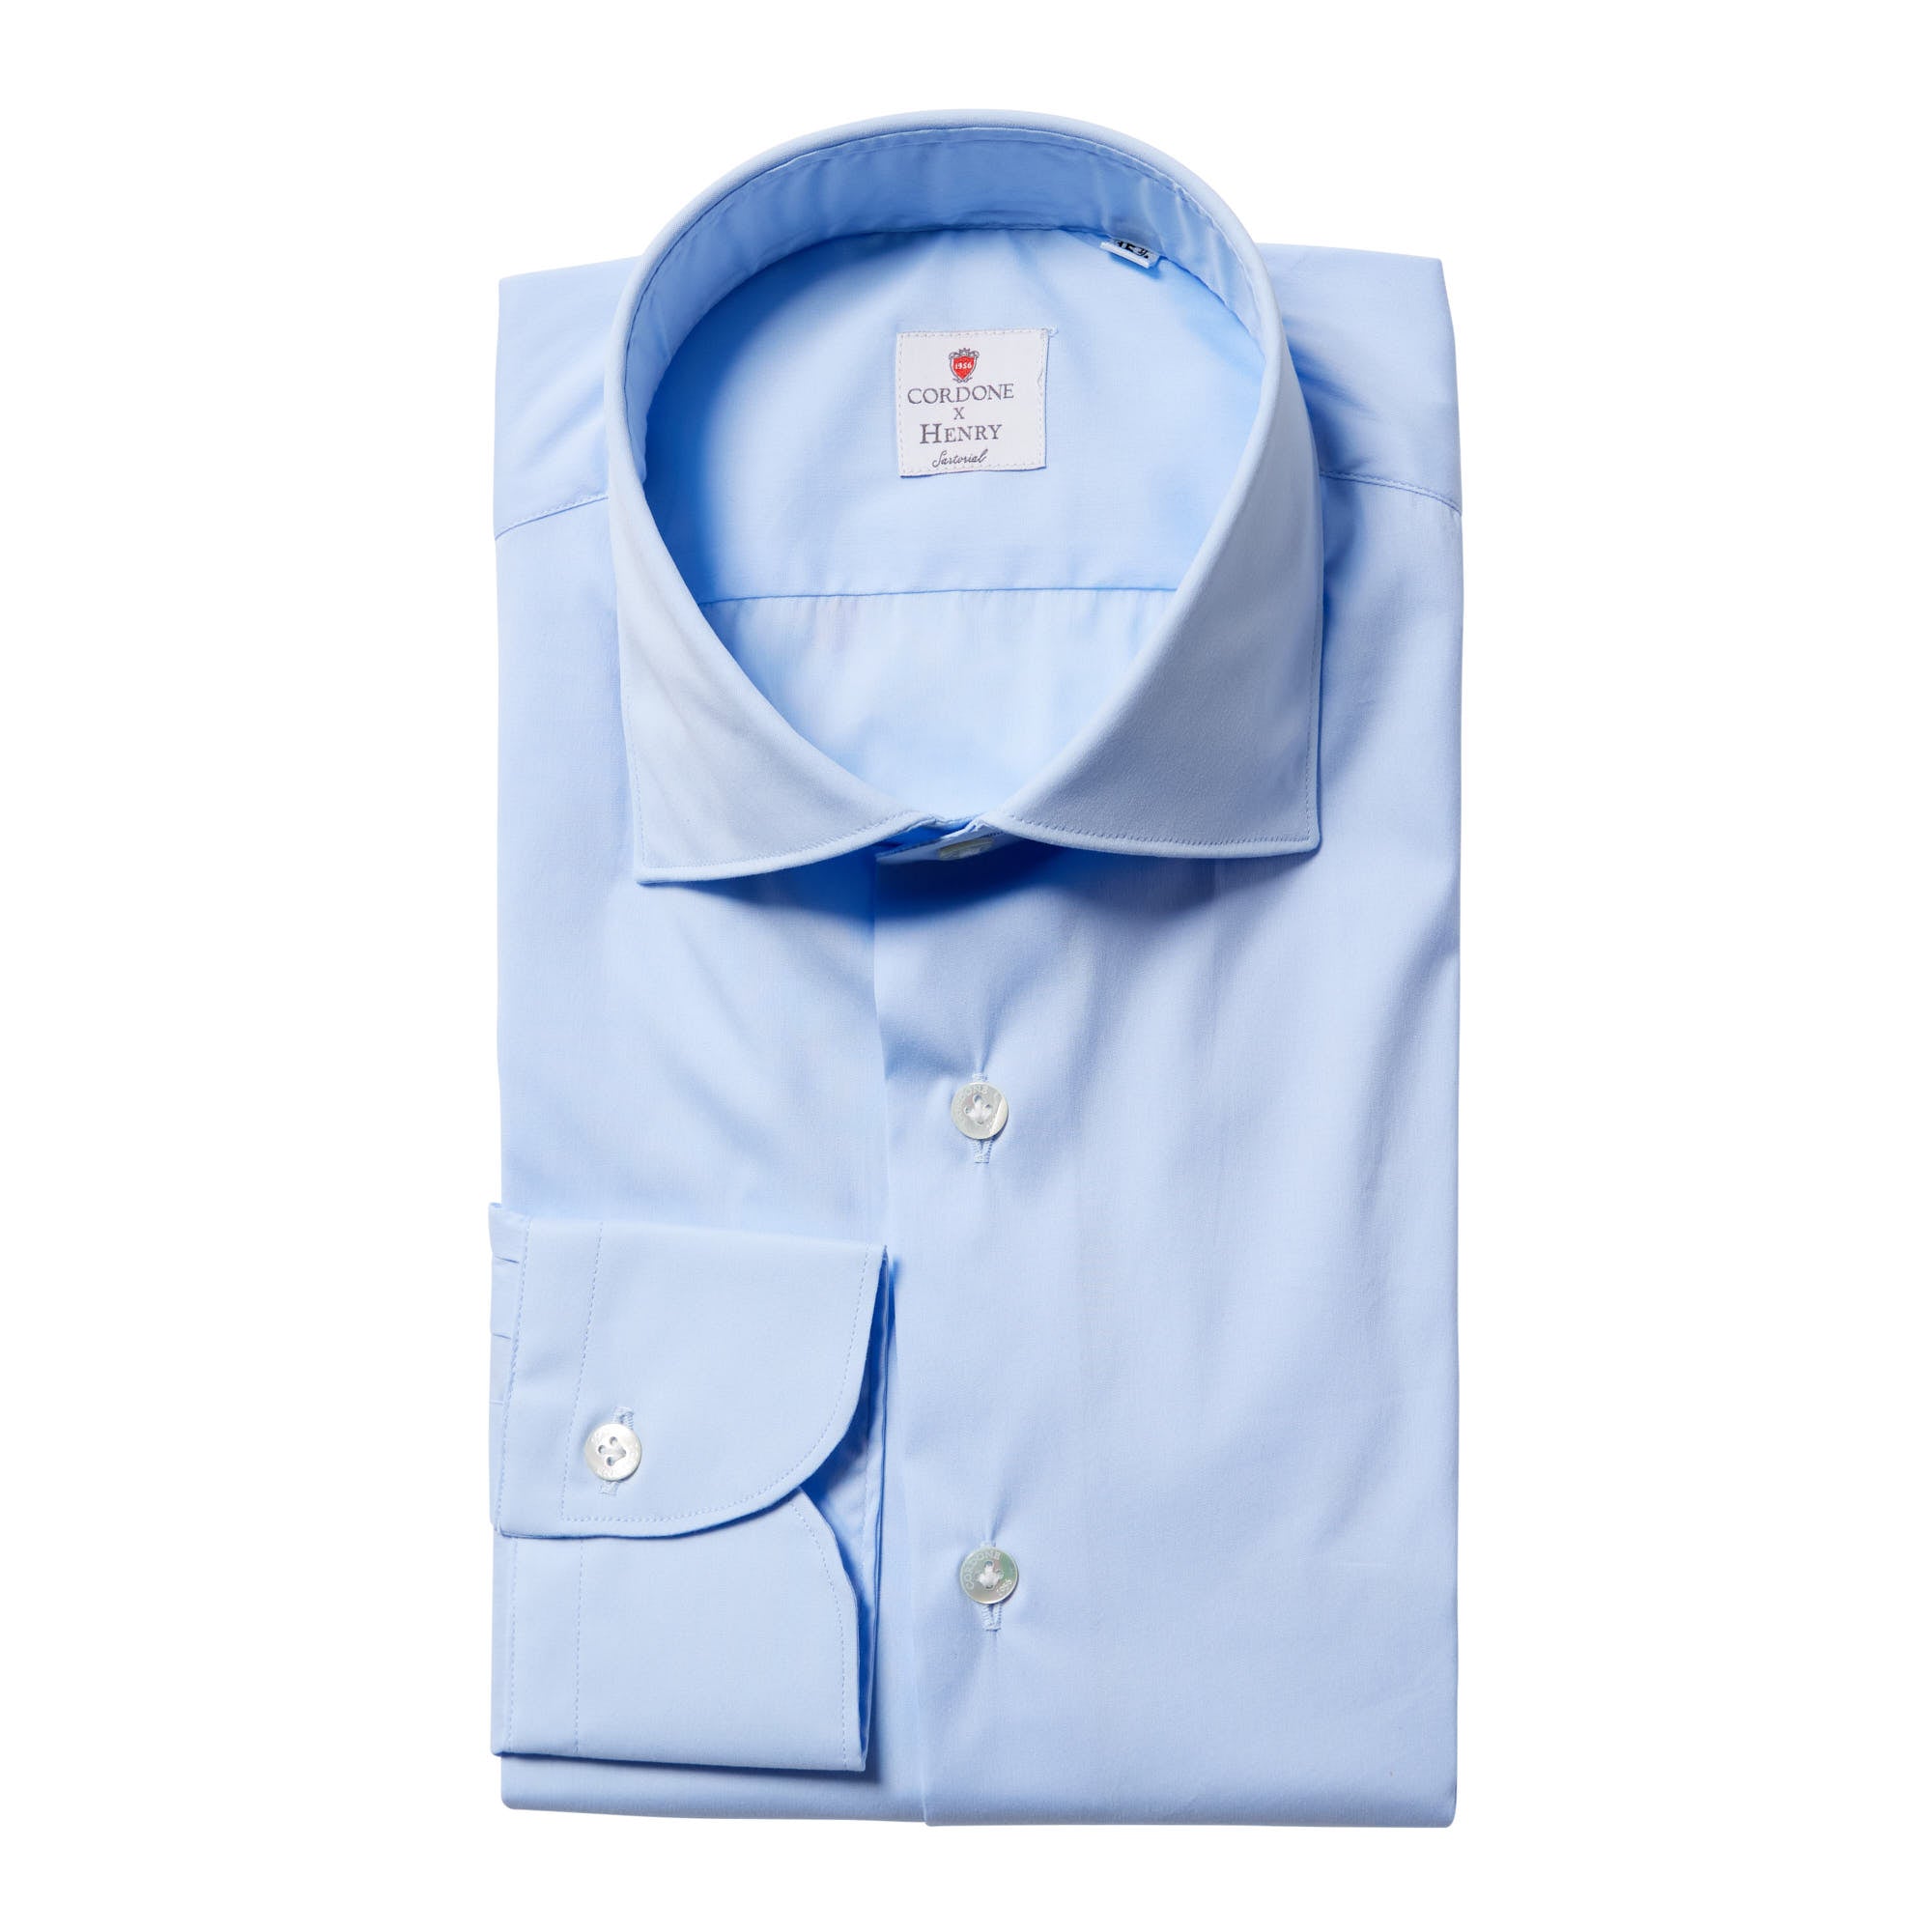 CORDONE Plain Cotton Long Sleeve Single Cuff Shirt LIGHT BLUE - Henry BucksShirts38AW240081 - LTBL - SC - 39